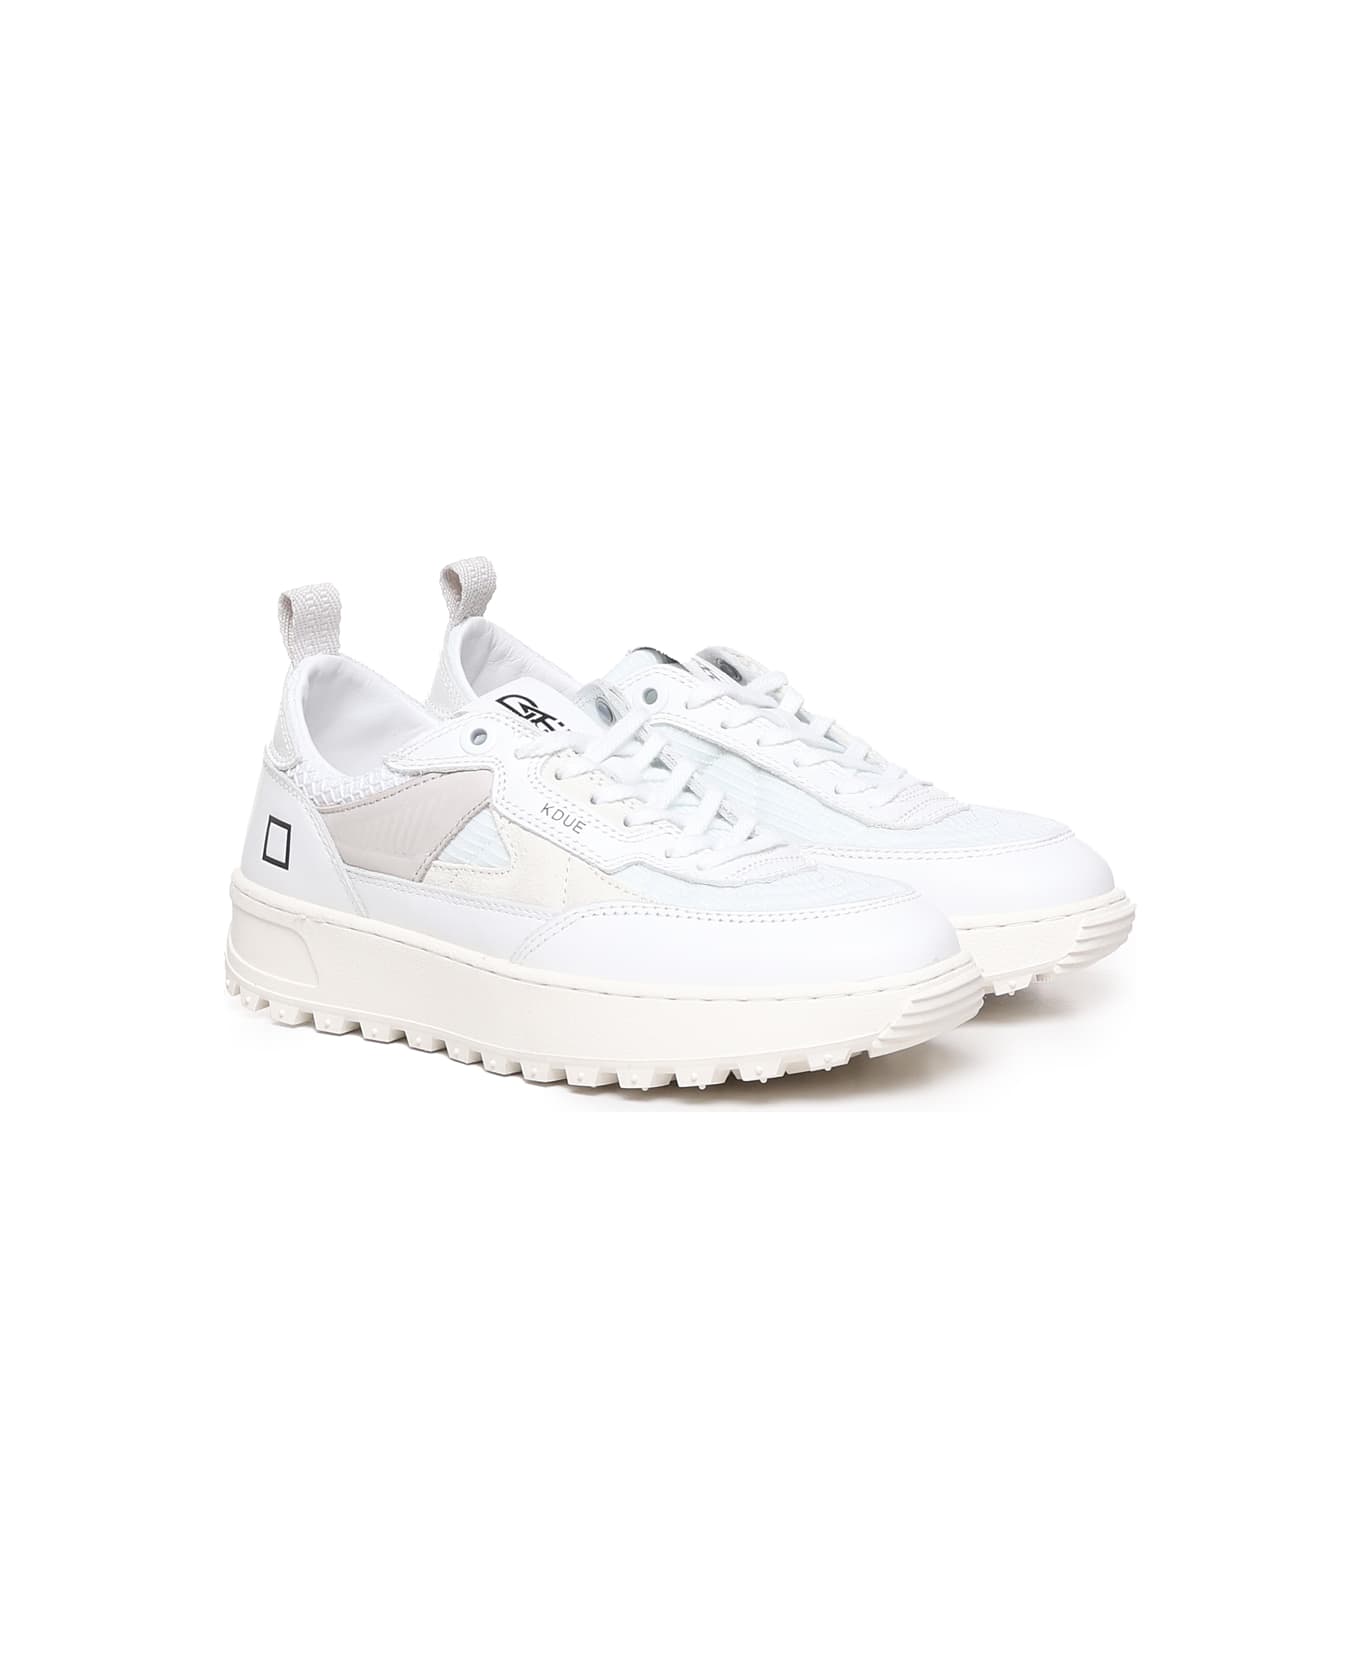 D.A.T.E. Kdue Mono Sneakers - White